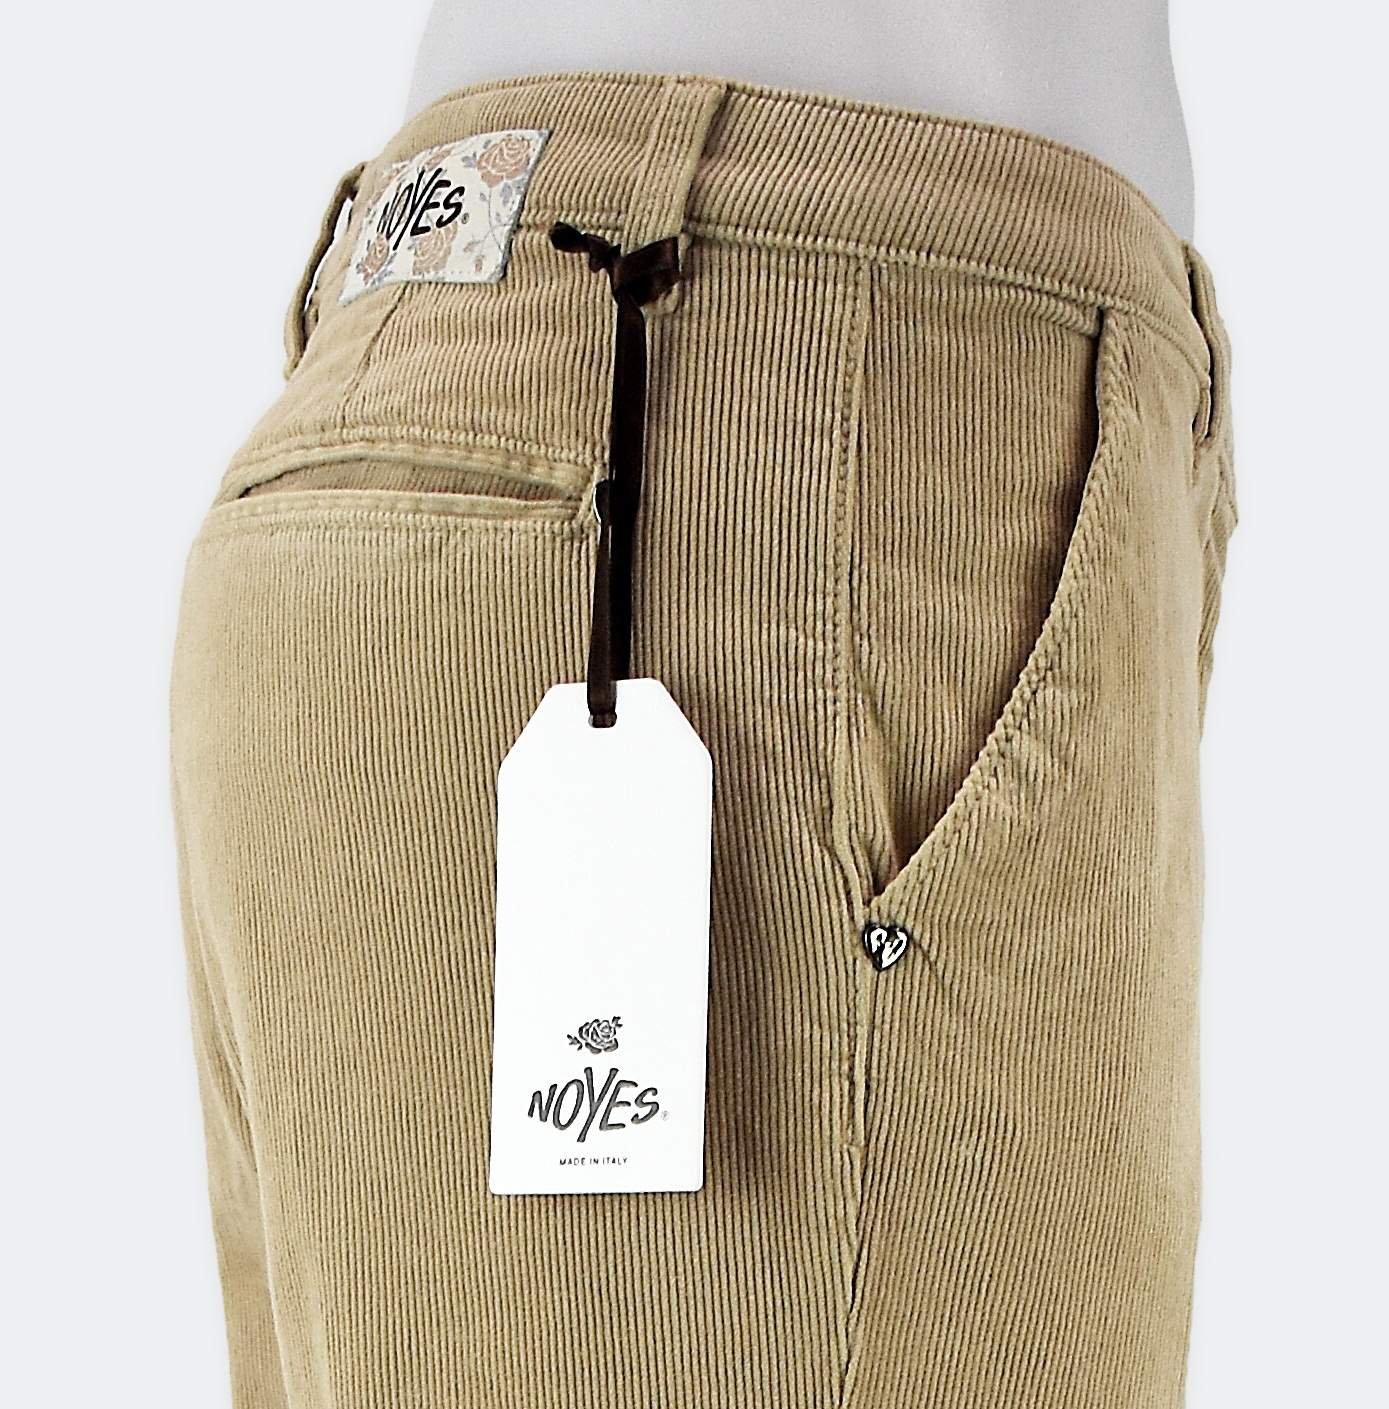 Pantalone chinos in velluto 500/righe elastico